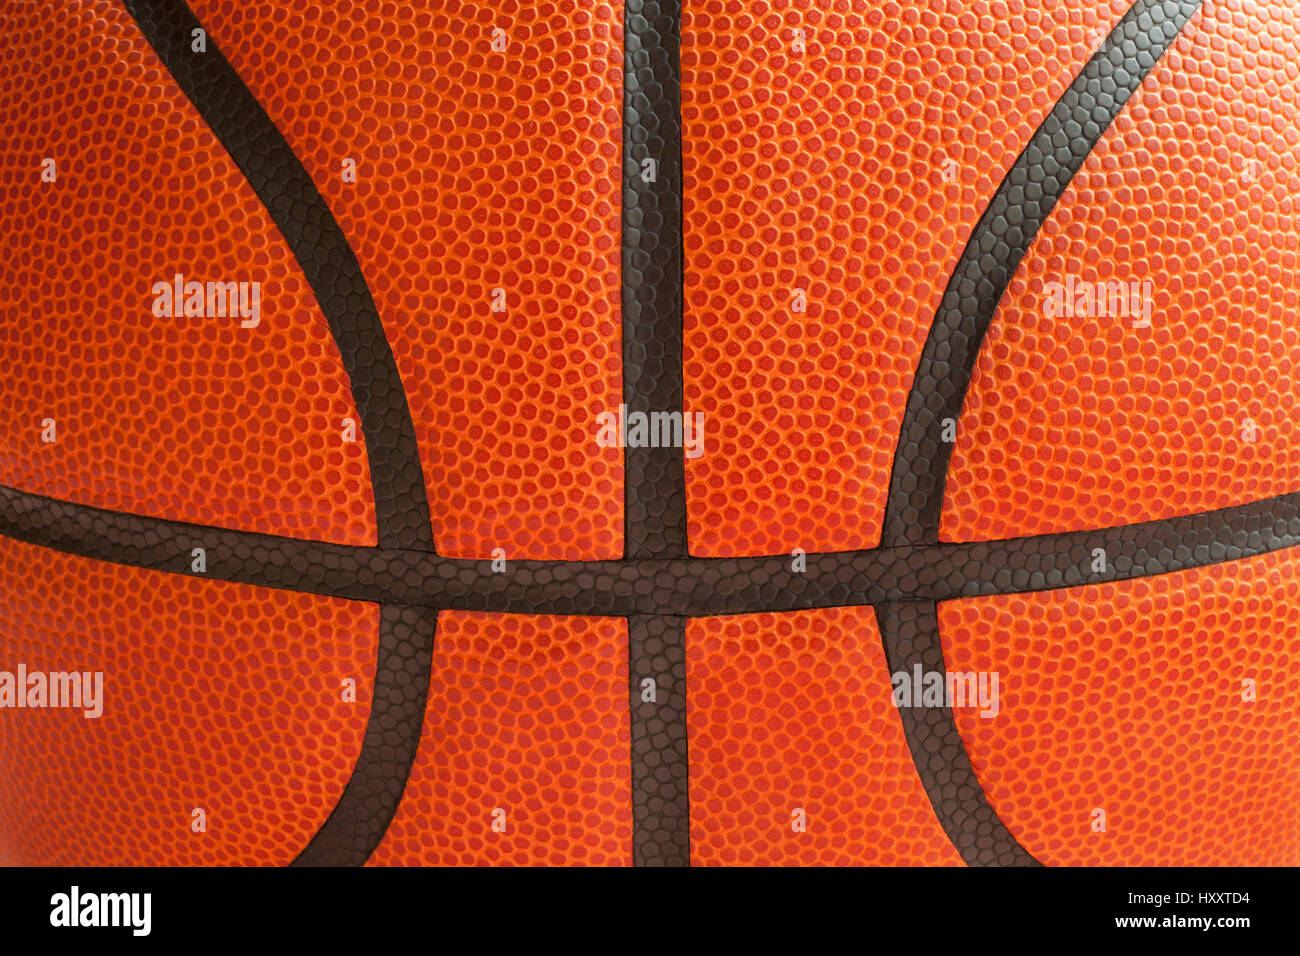 Close up shot of a basketball showing the black seams Stock Photo